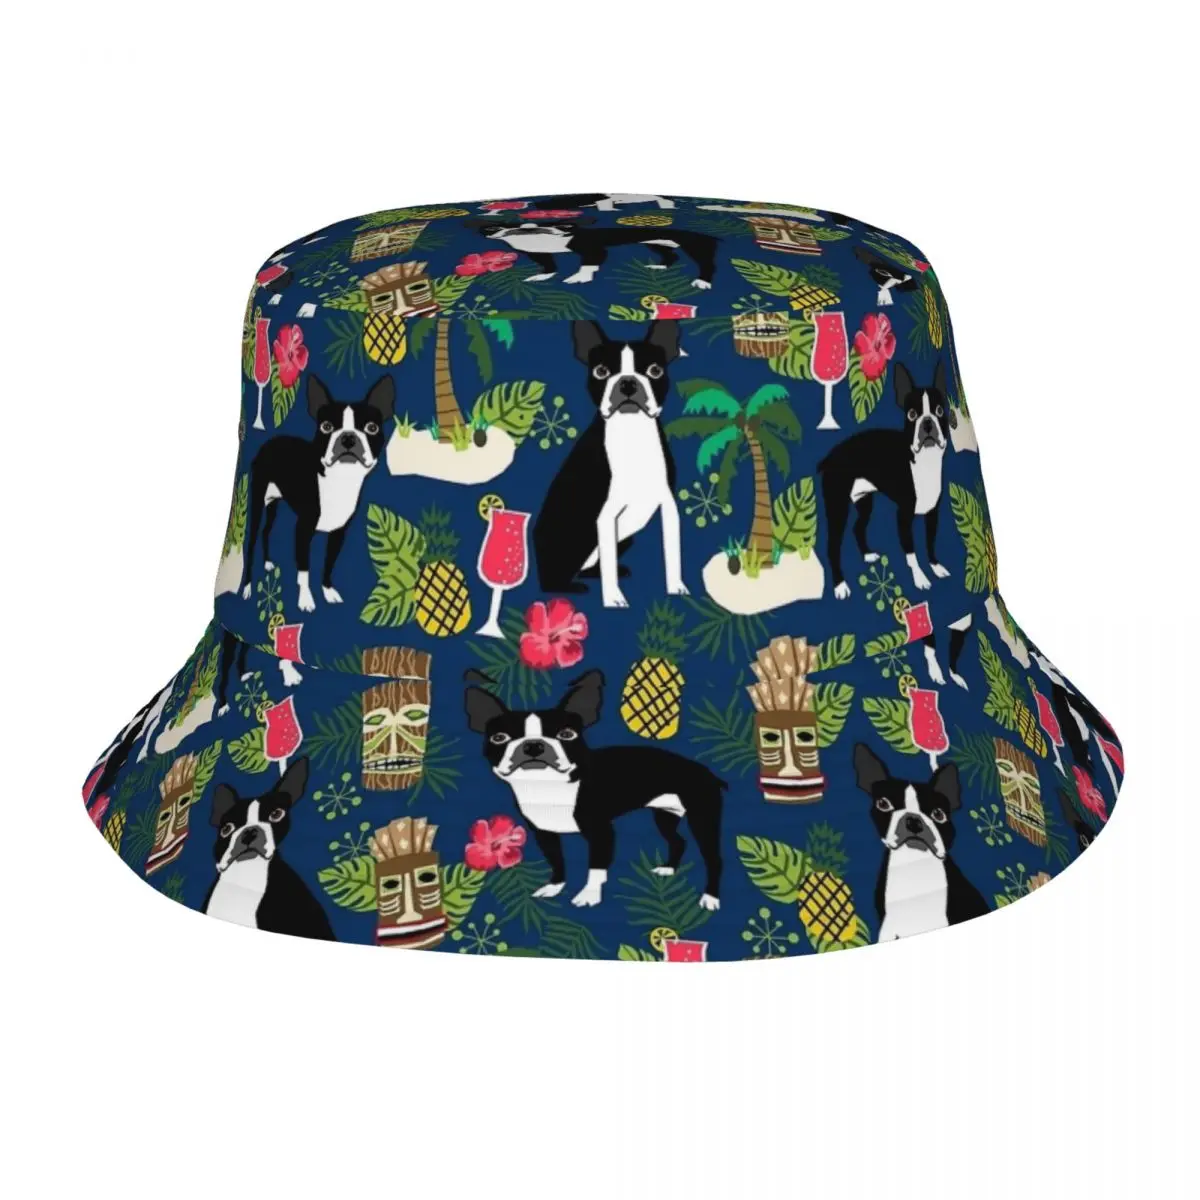 Dog tiki bucket hat summer travel headwear merch tropical fishing cap outdoor men women thumb200